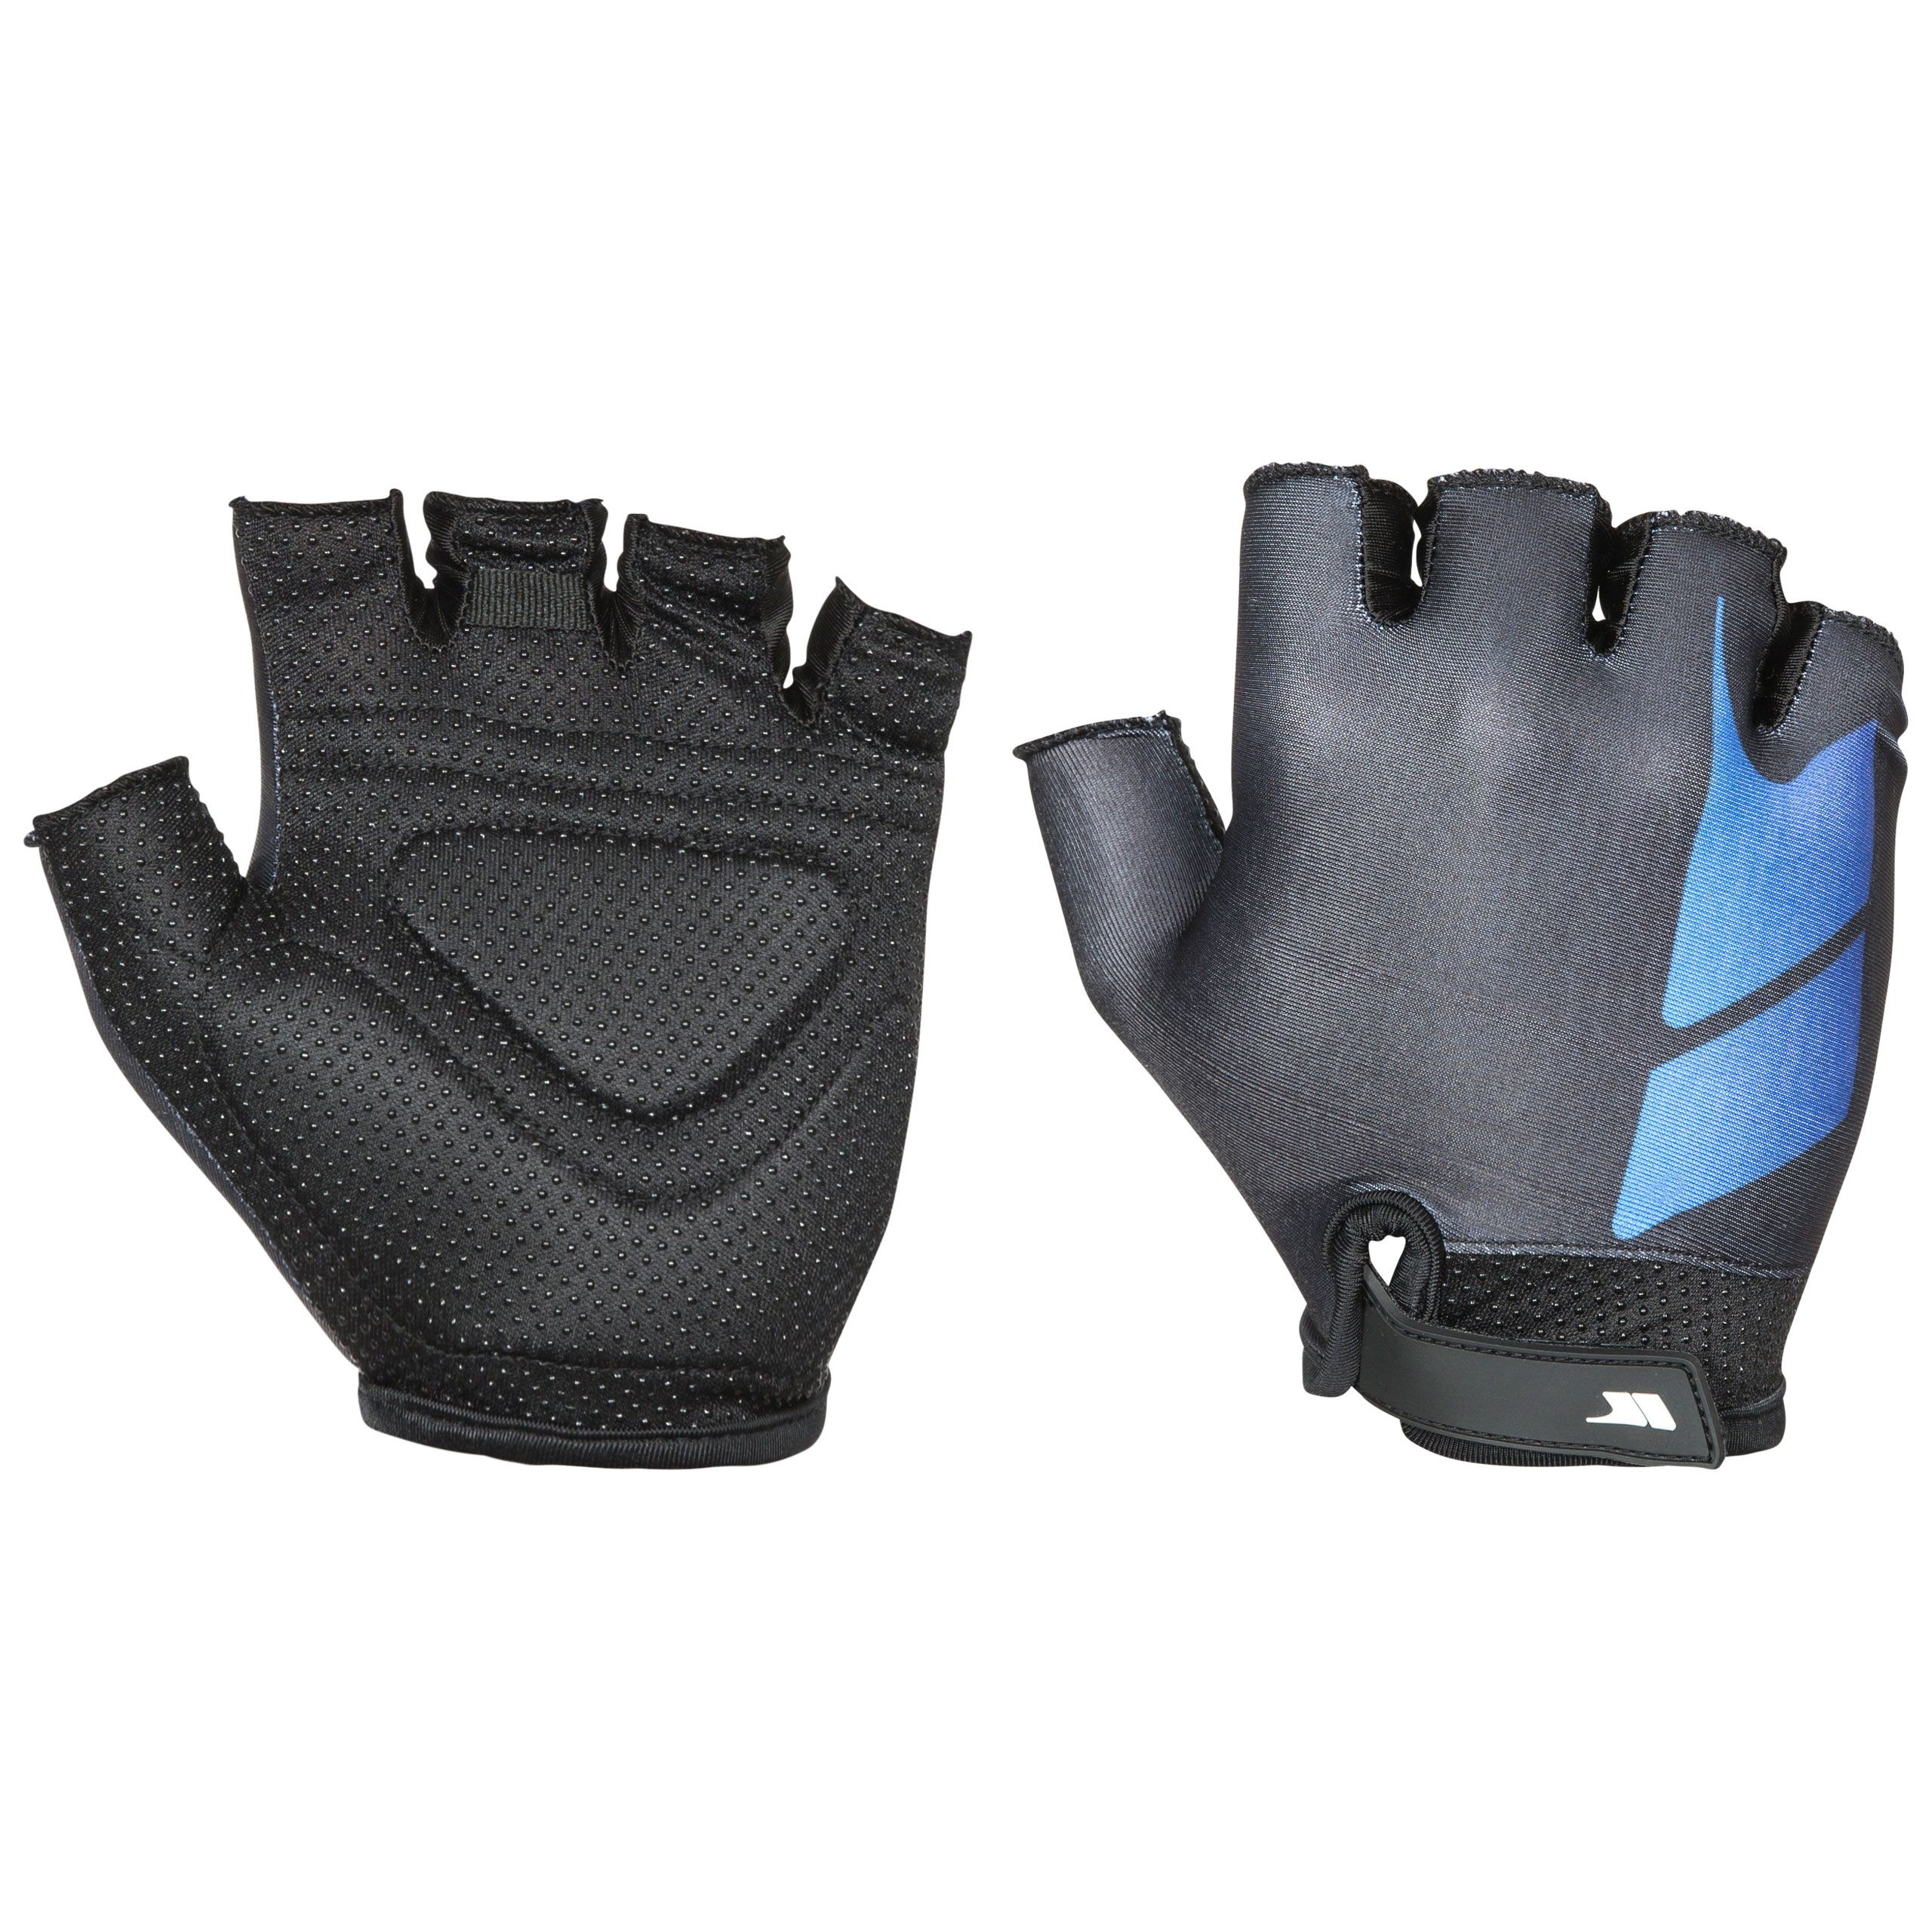 Roverek Lightly Padded Cycling Gloves